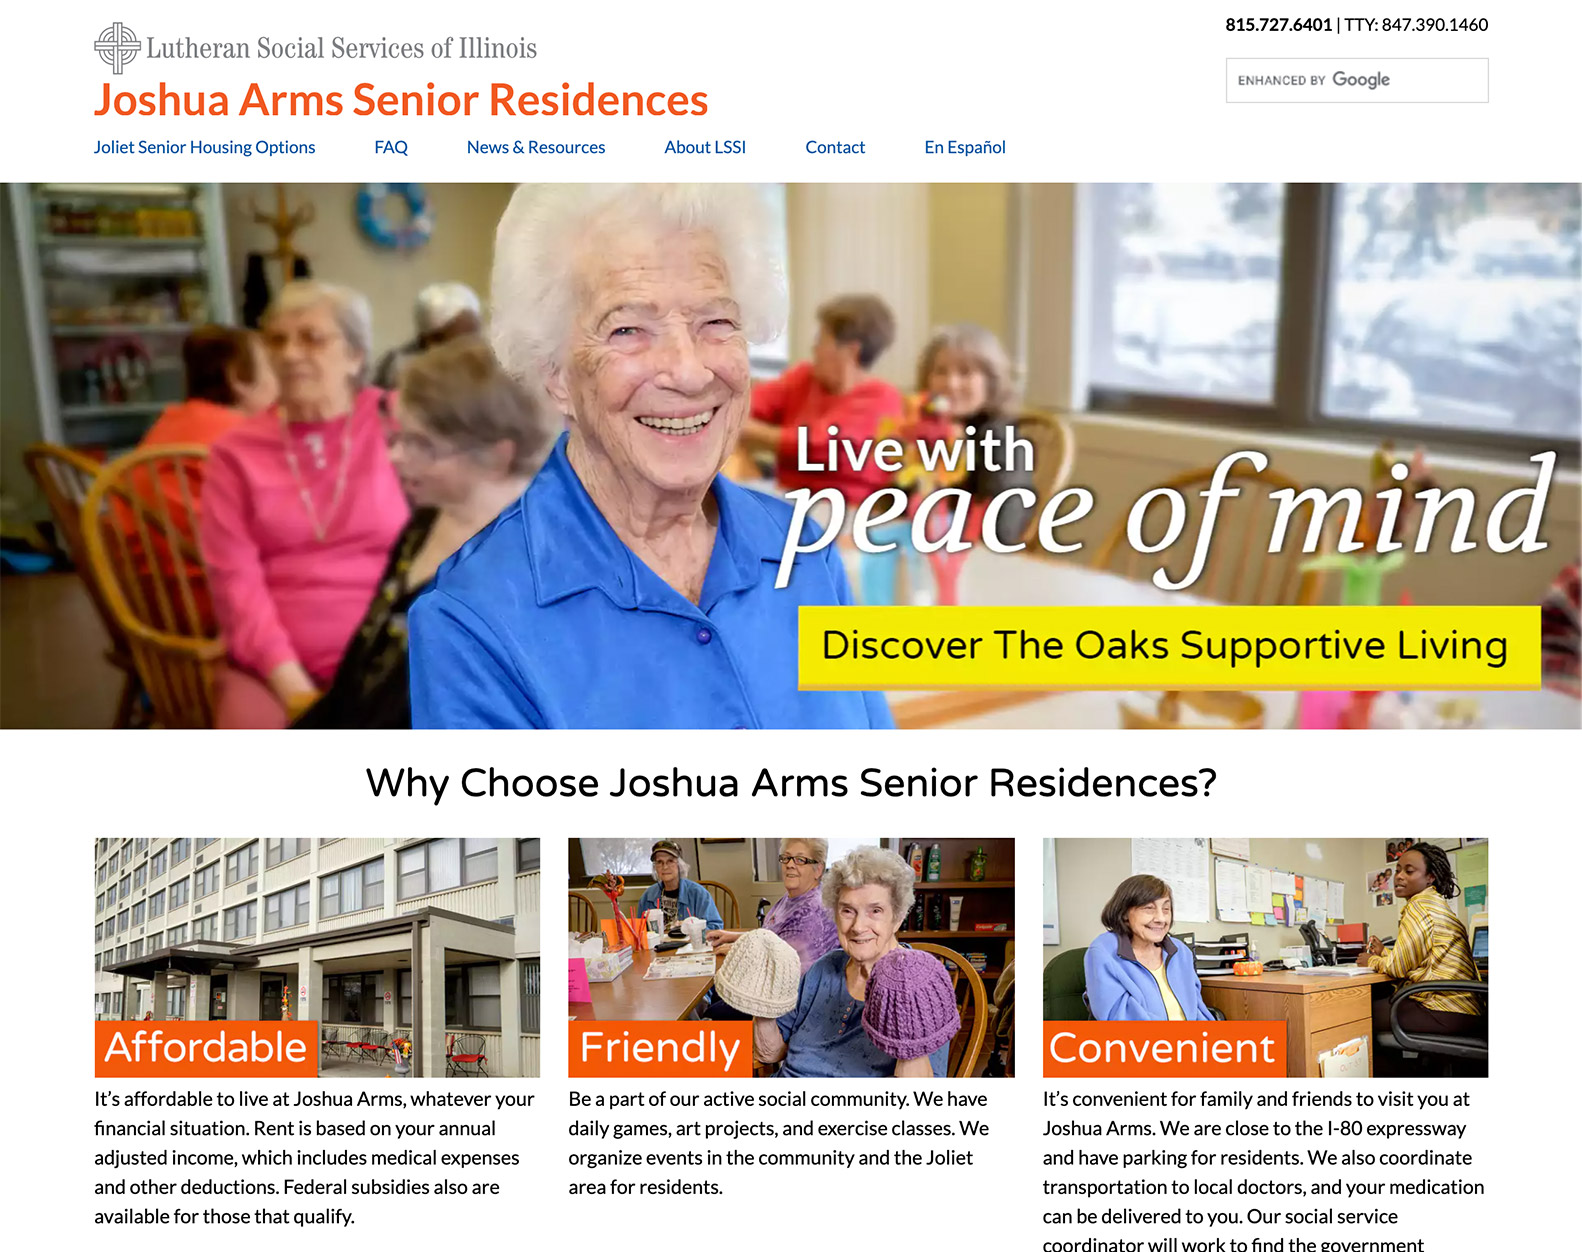 Click here to view a screenshot of Joshua Arms: Homepage - Desktop